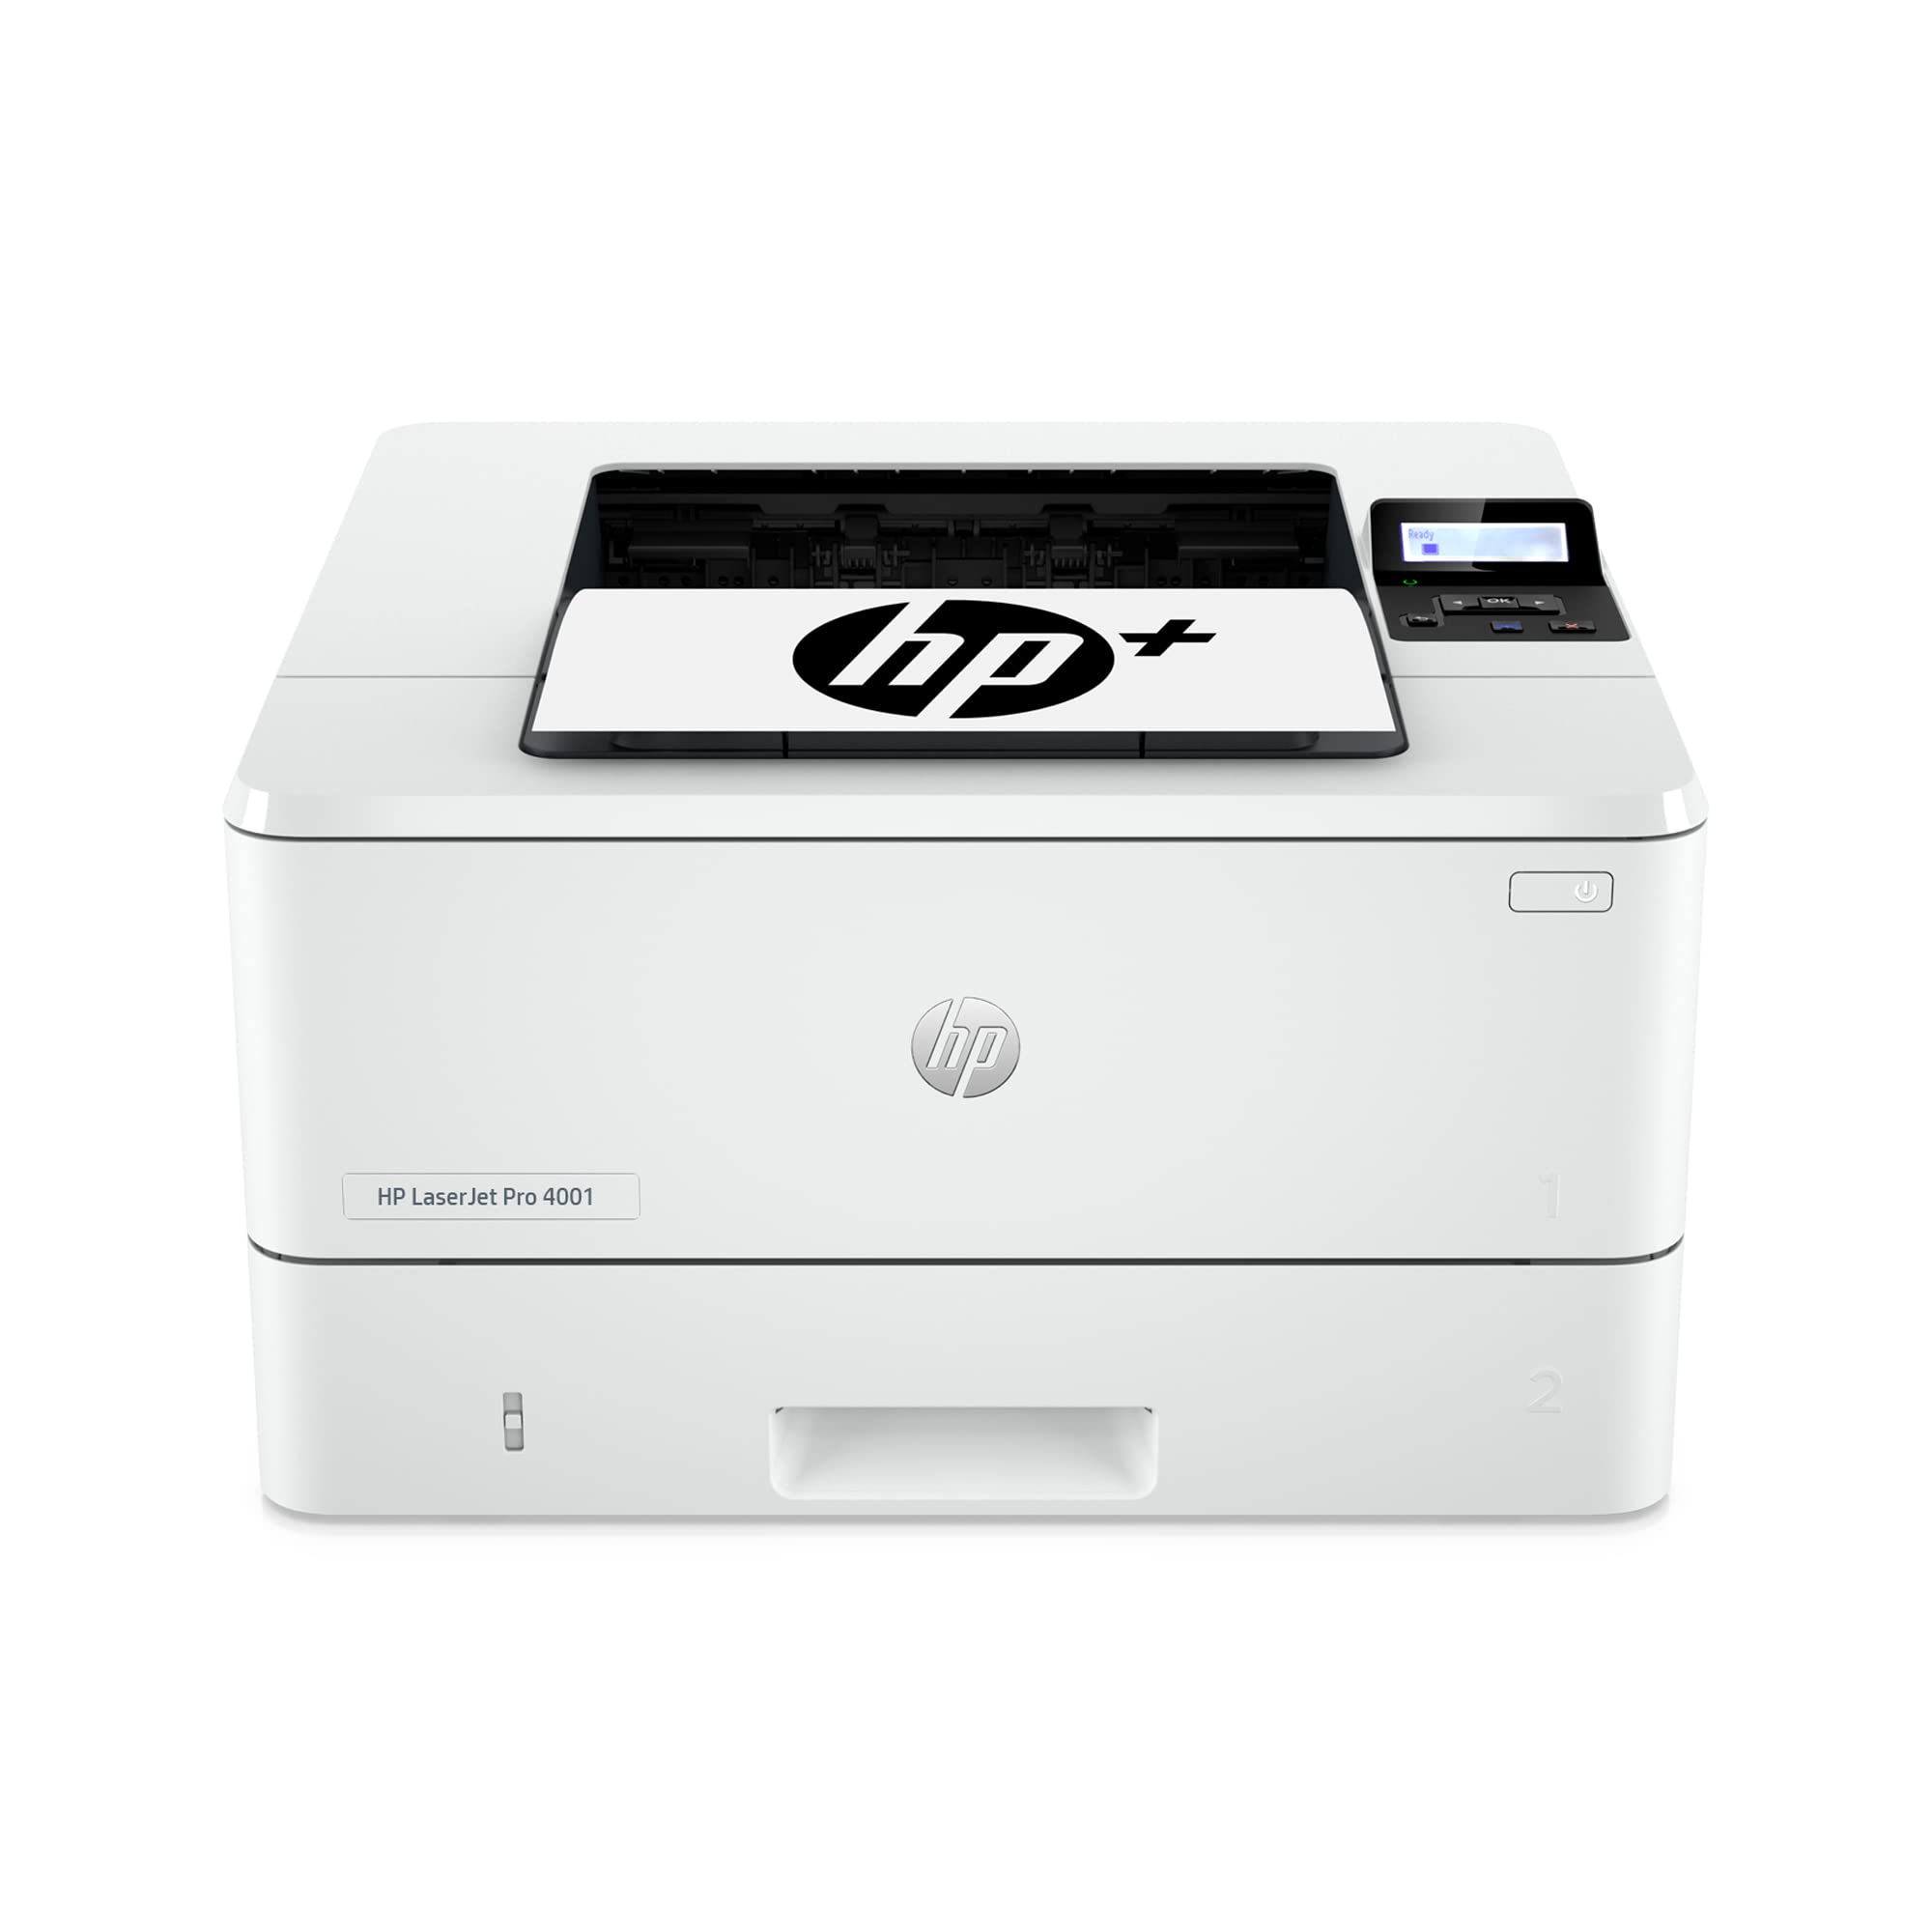 HP LaserJet Pro 4001dwe Impressora sem fio em preto e b...